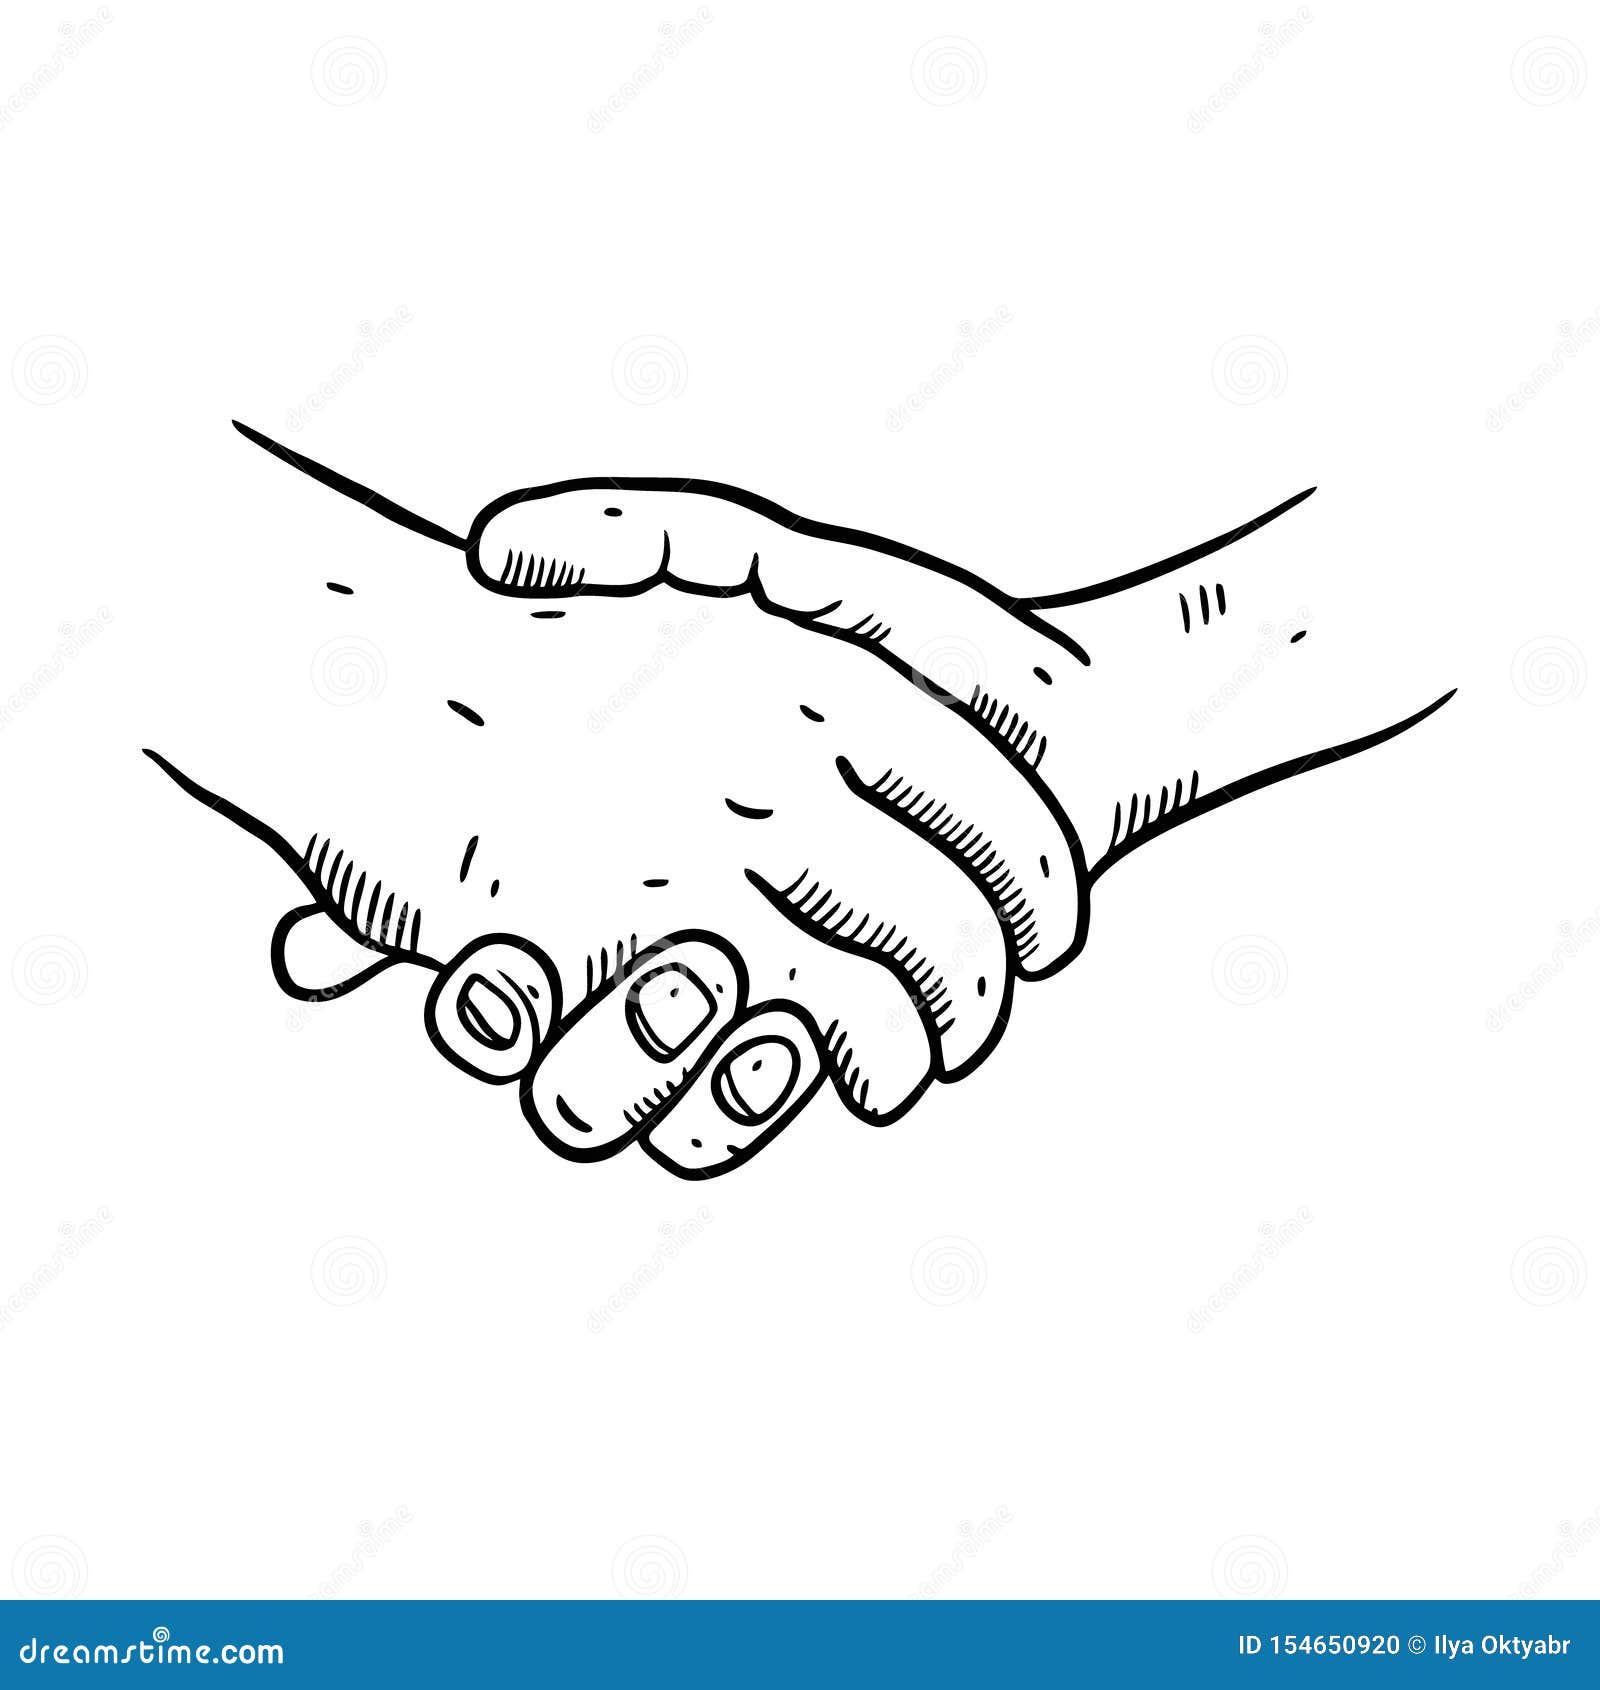 Handshake Hand Drawn Vector Illustration. Engraving Style Stock ...